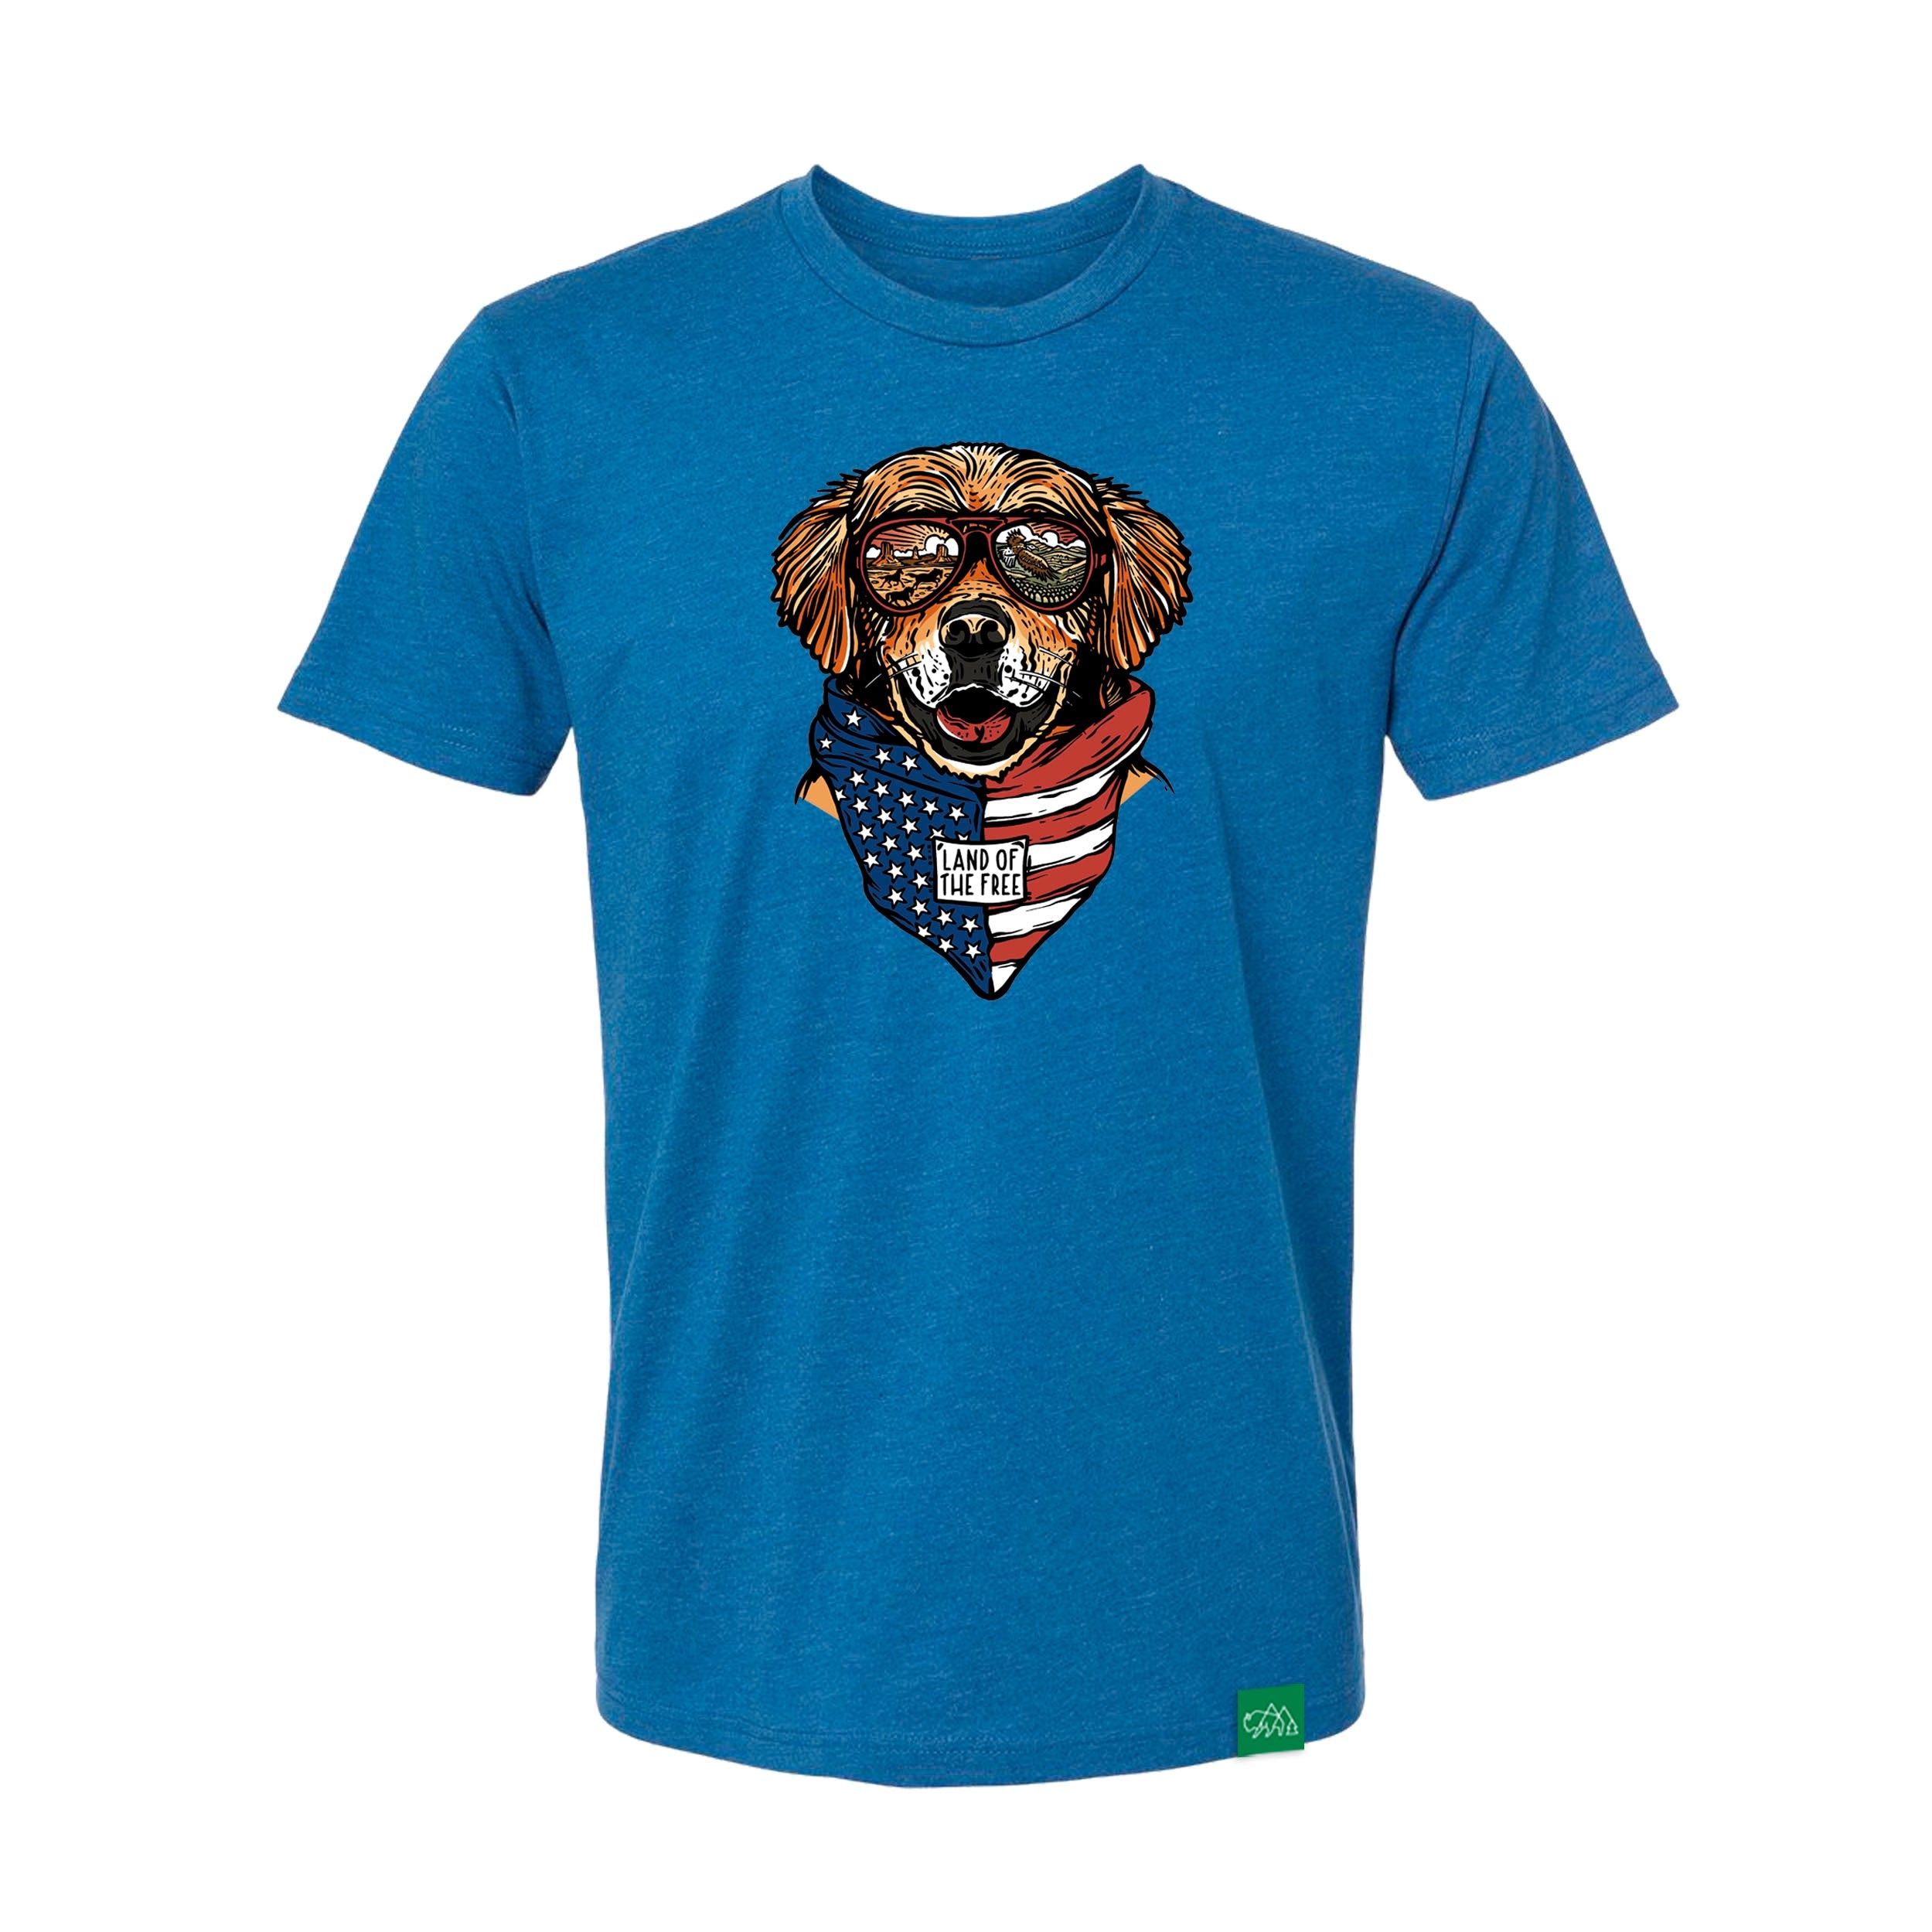 Men's Patriotic U.S.A. Quick-Dry Jersey T-Shirt, Size: 2XL